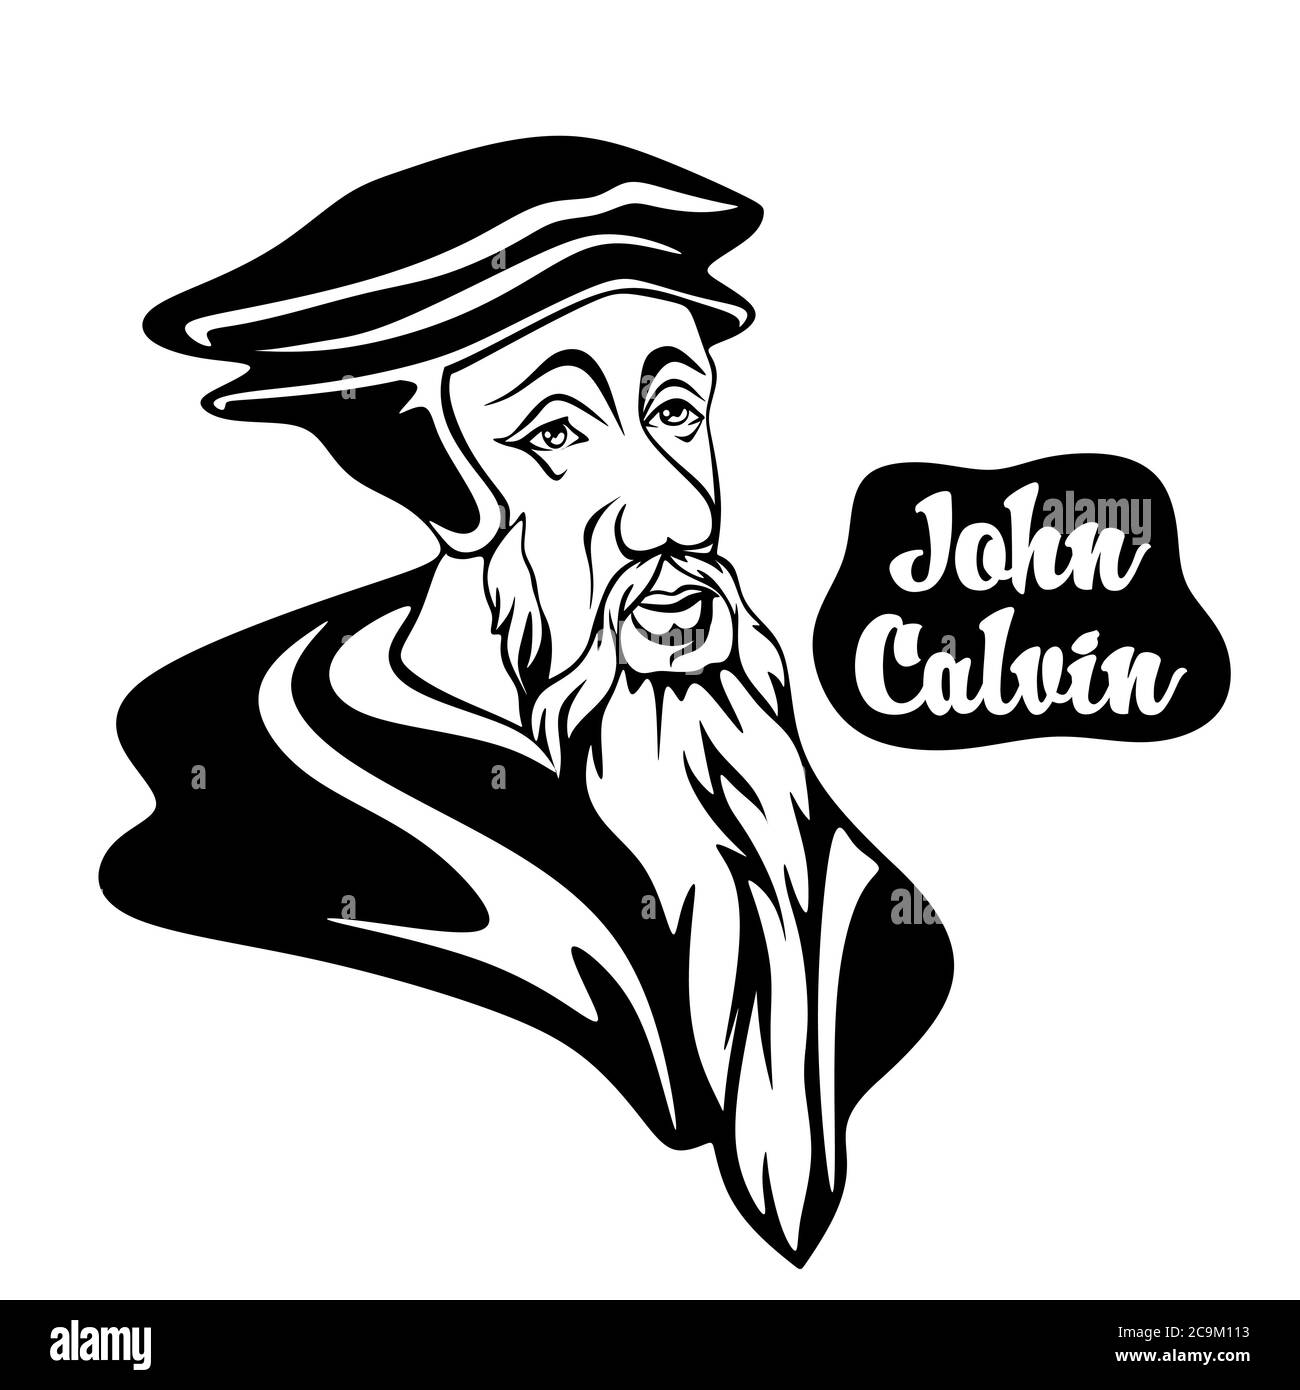 Cartoon on John Calvin. One of the leaders of the European Christian Reformation. Stock Vector